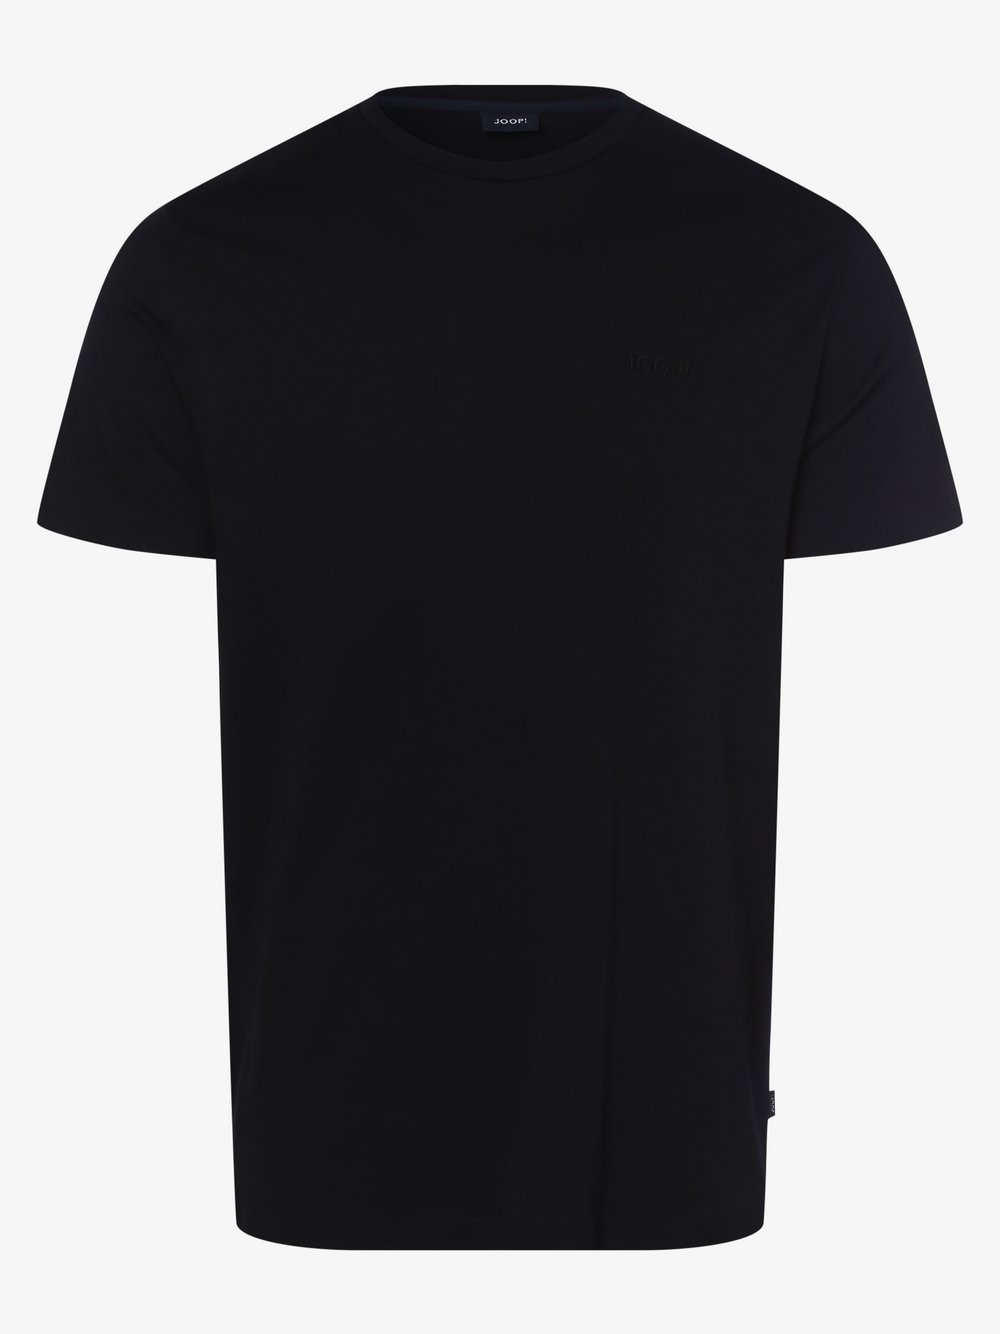 Joop - T-shirt męski – Corrado, czarny